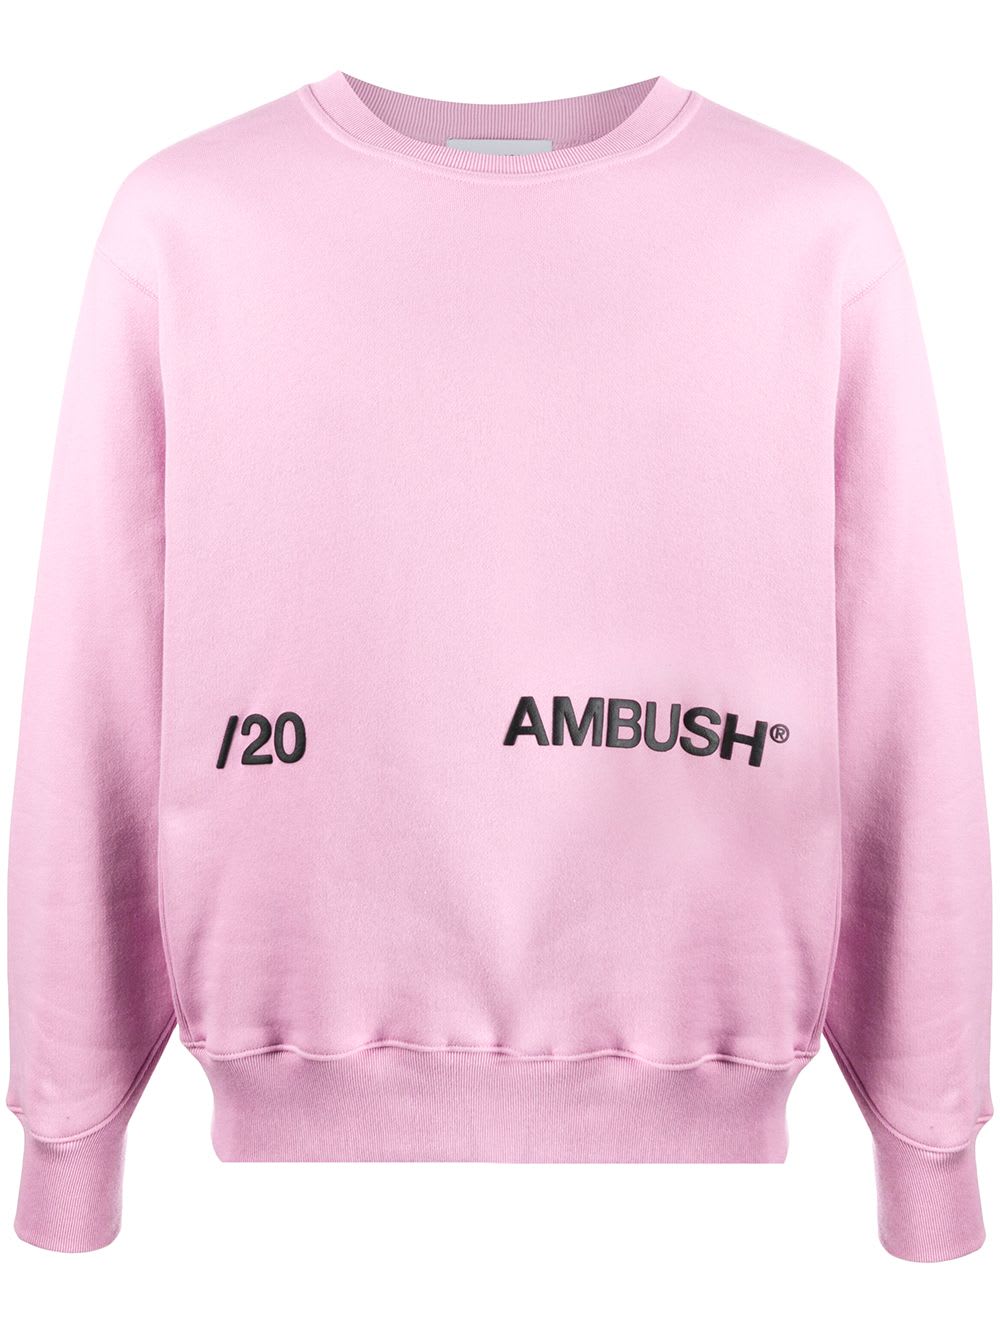 AMBUSH AMBUSH LOGO SWEATSHIRT,11282095